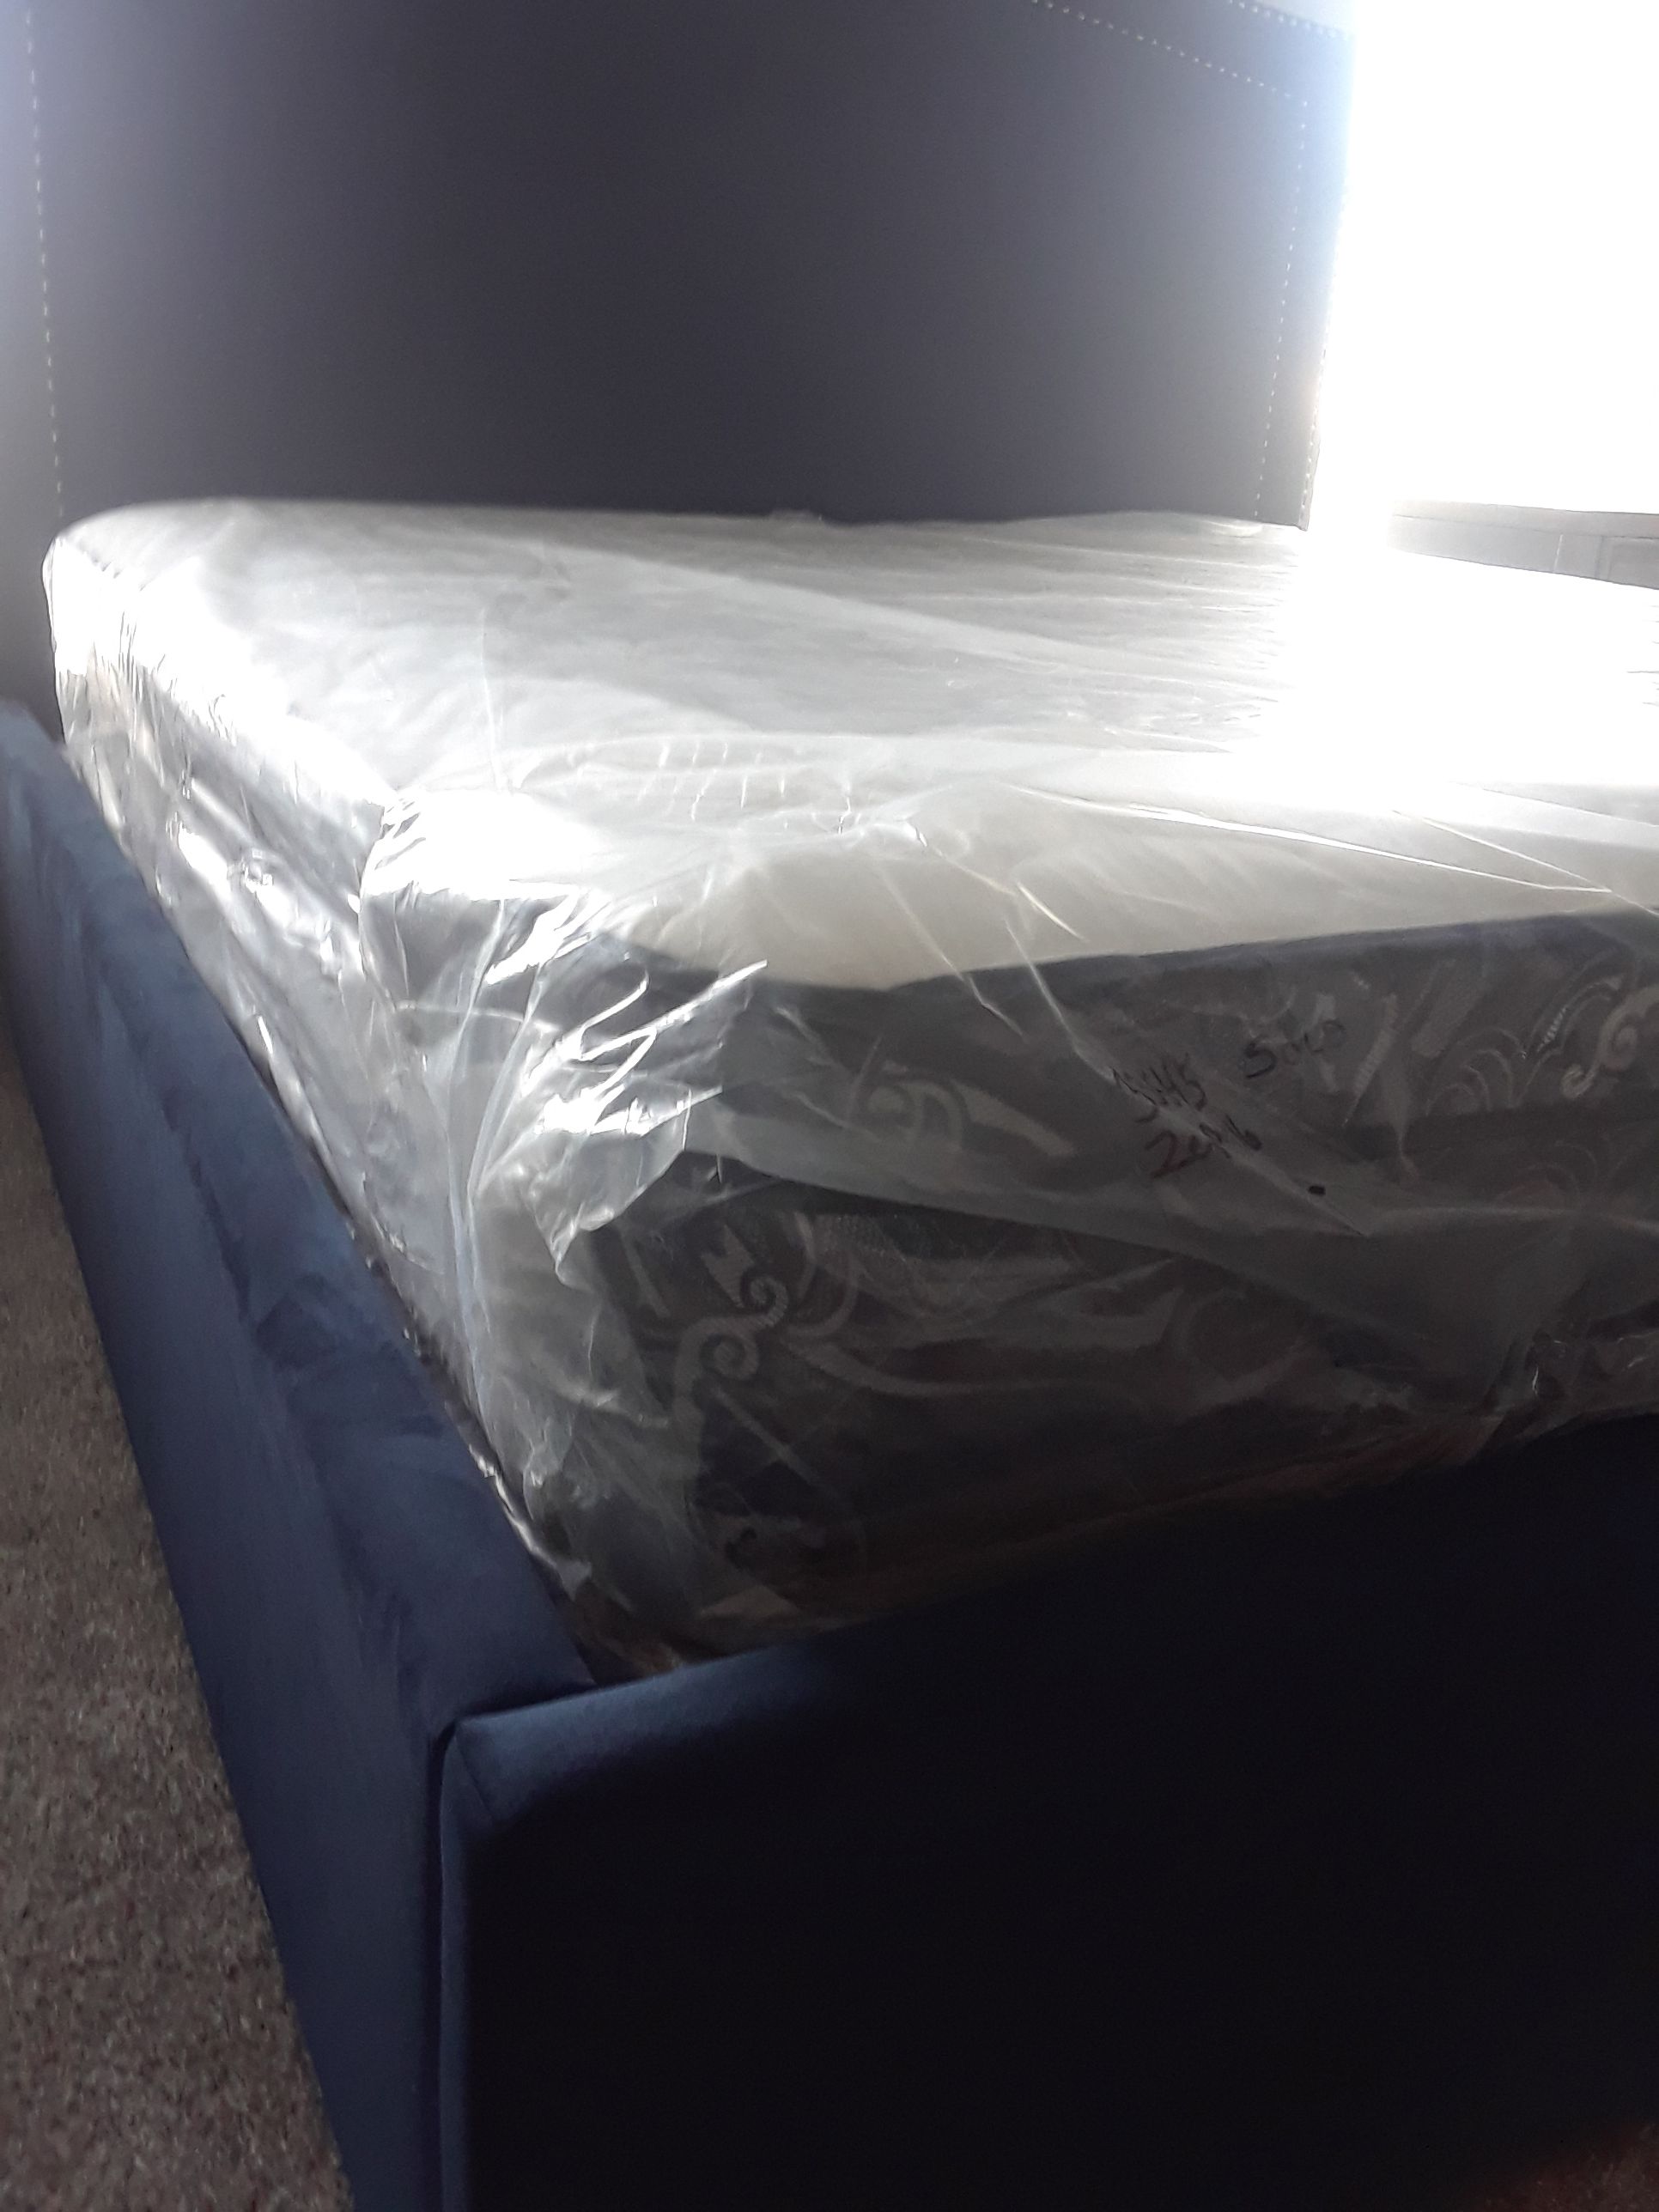 Pillow top queen size mattress sets $299.99 (Mattress and boxsprings only)